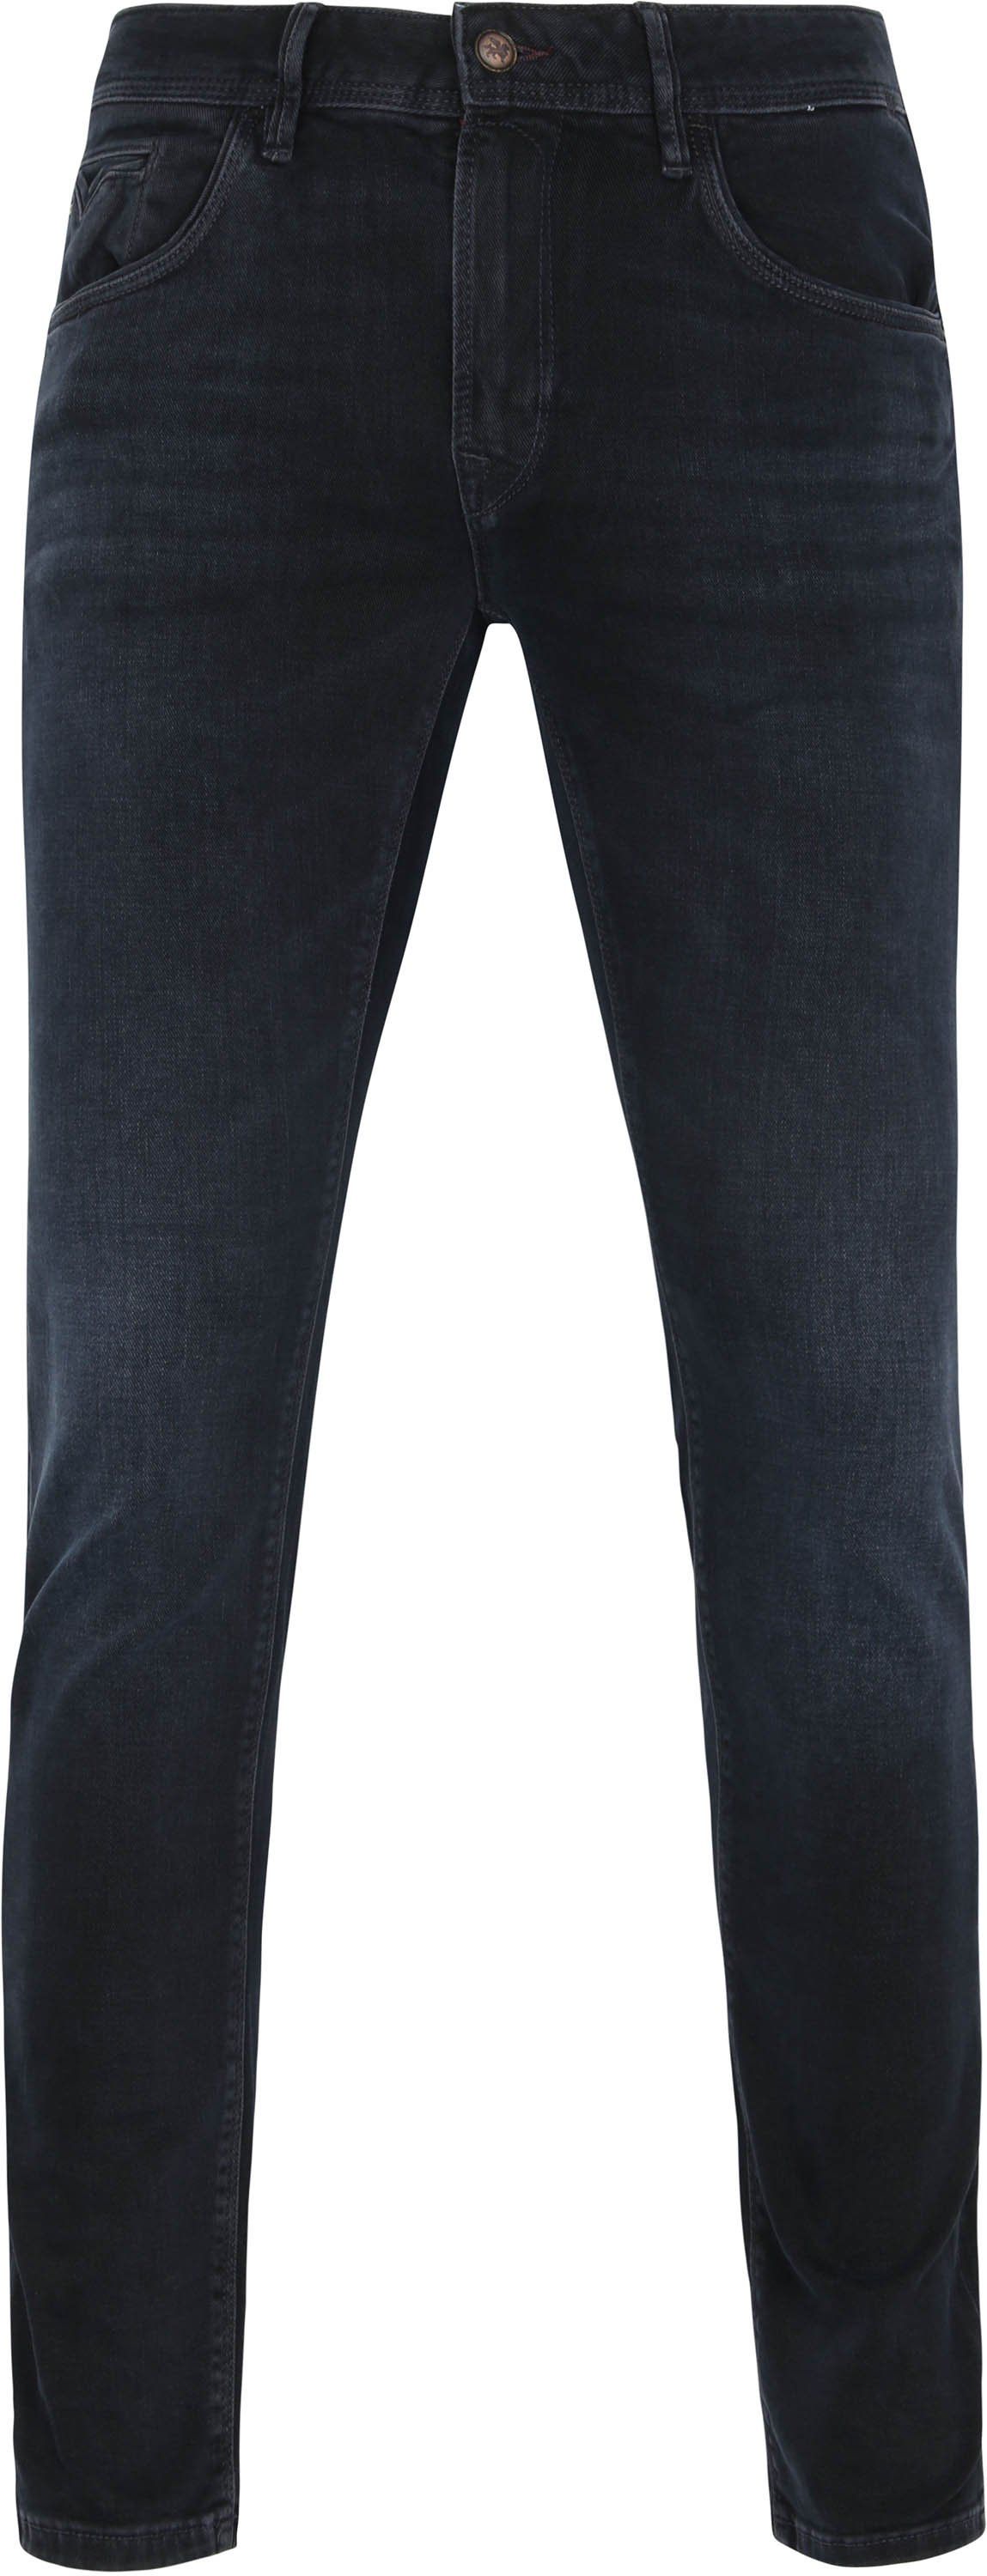 Vanguard V85 Scrambler Jeans SF Black size W 30